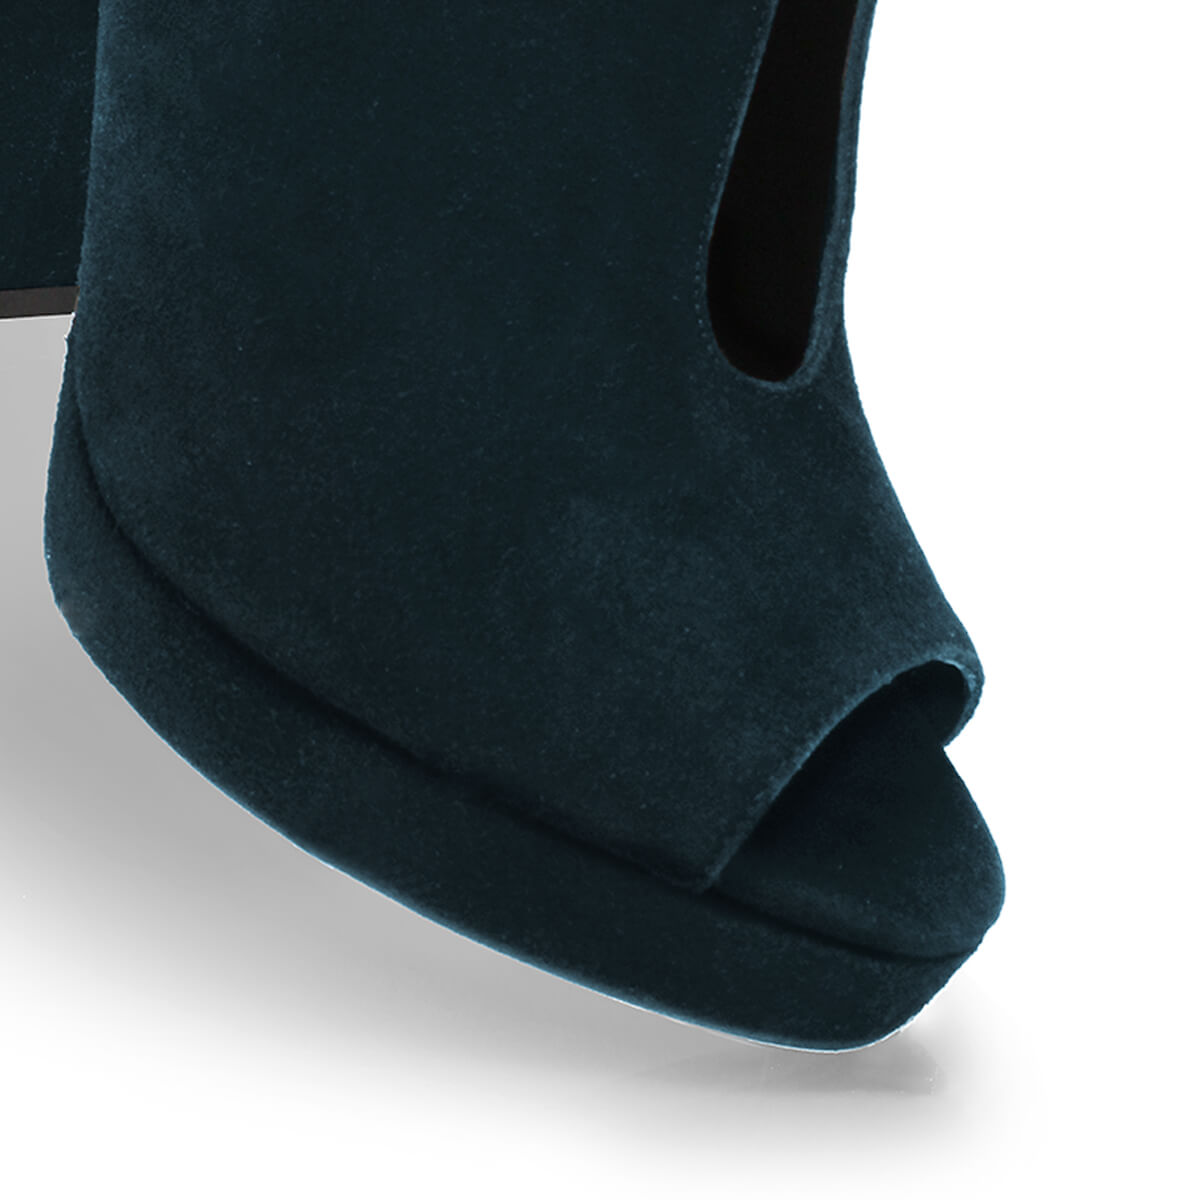 ZAIS 125 -  Ante Azul Verde Regina Romero Zapato Sandalia Plataforma Tacon Alto Para Dama en Piel